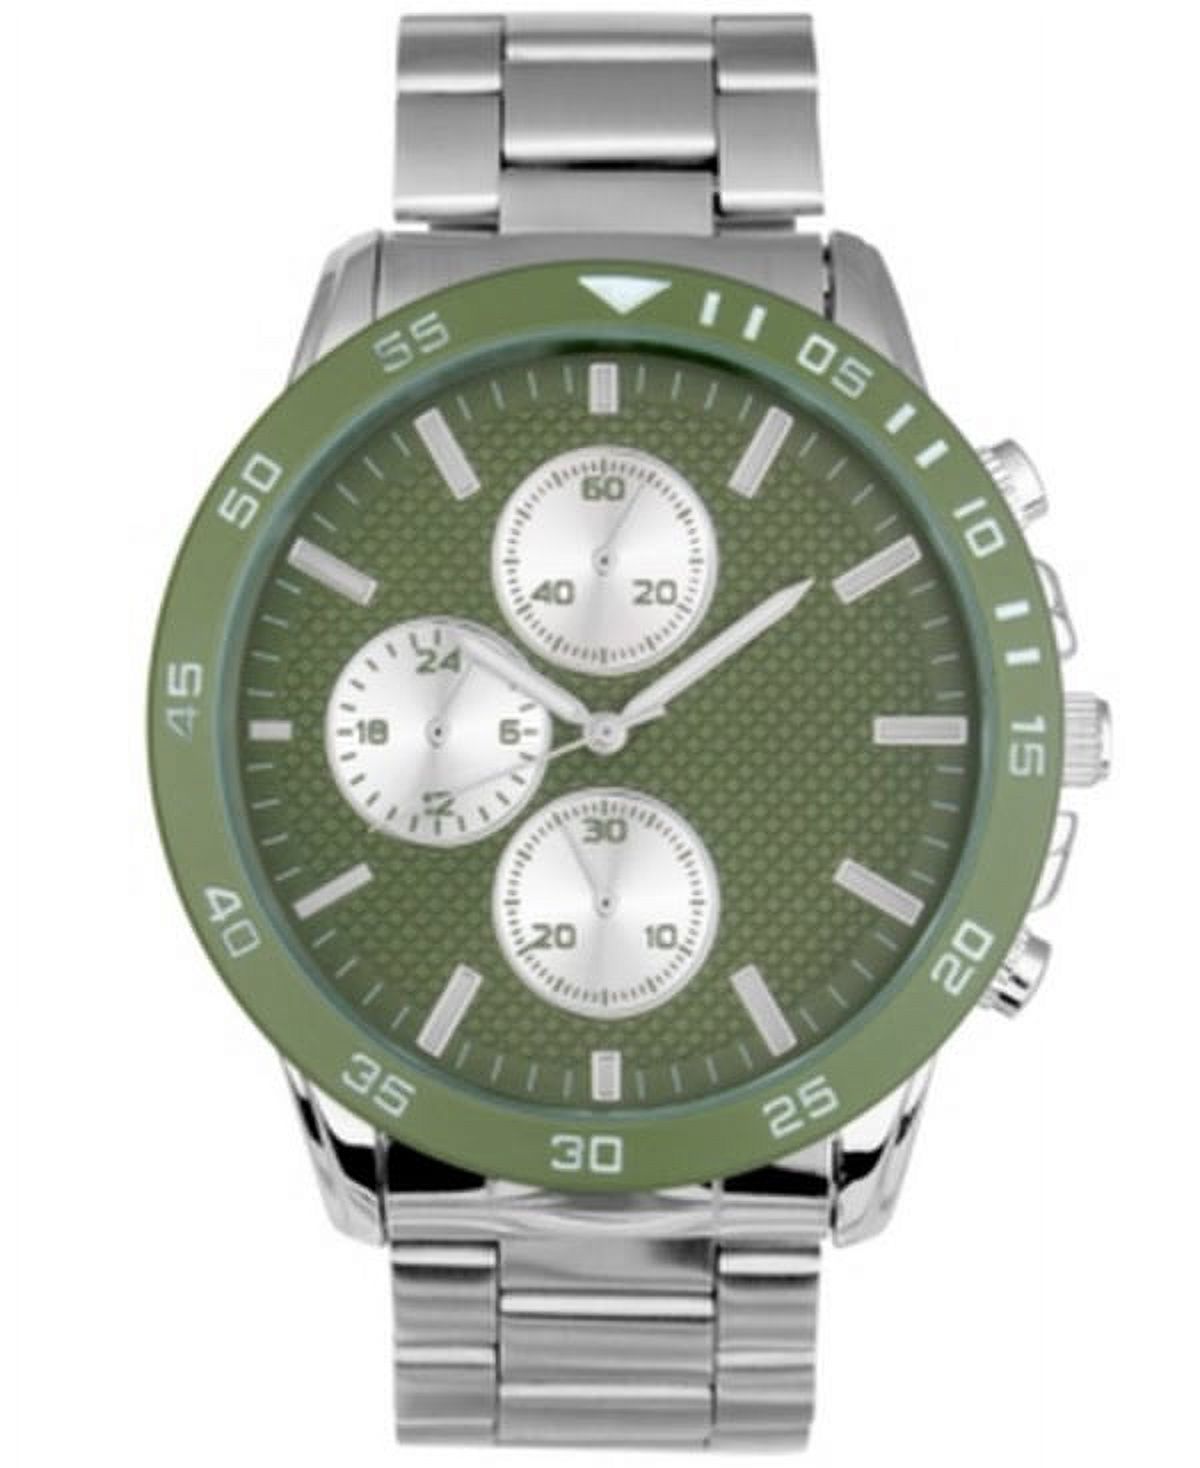 Inc Mens Imitation Chronograph Silver-Tone Link Bracelet Watch 48mm: OS/Green - image 1 of 1